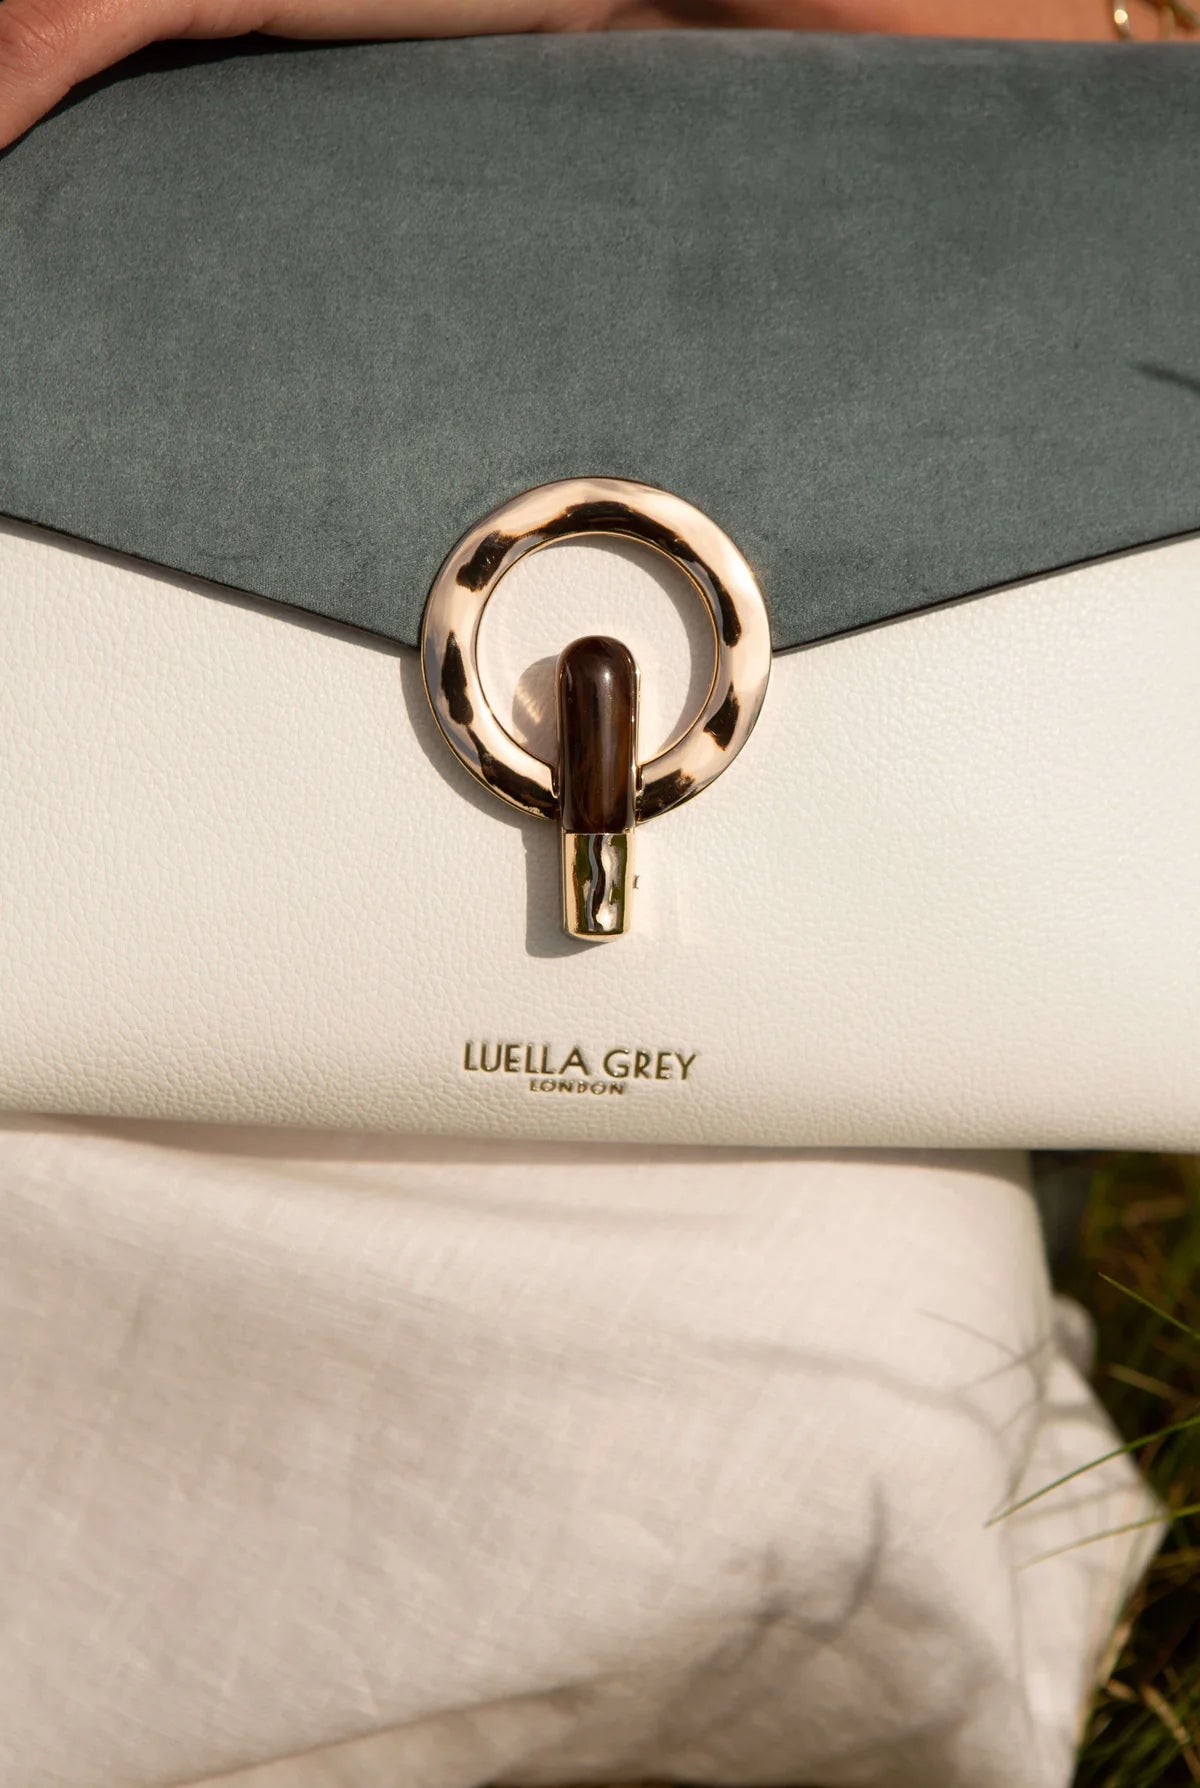 Luella Grey Anoushka CrossBody Bag White/Sea Green